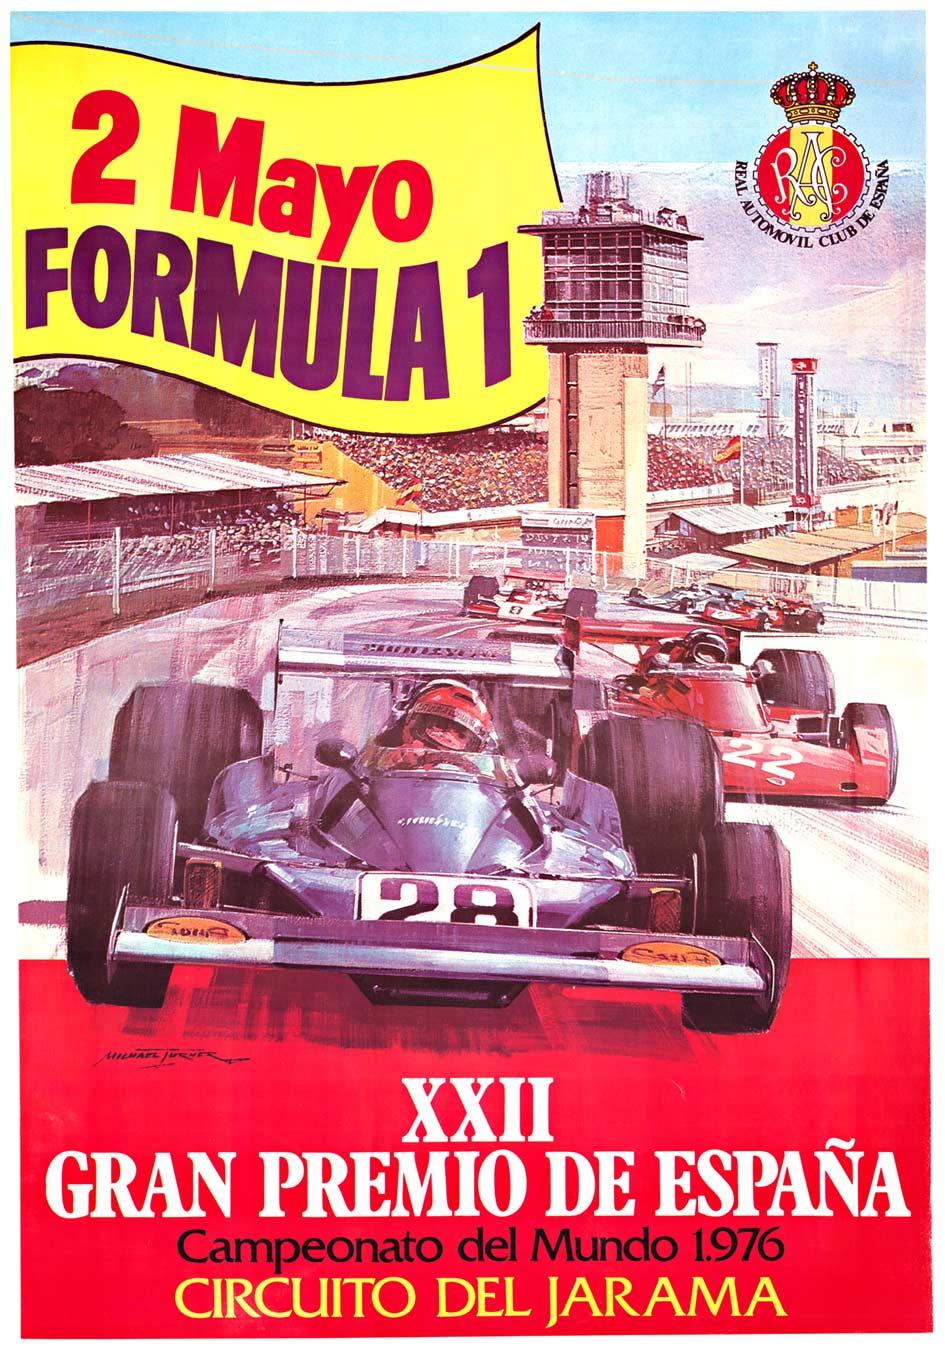 Michael Turner Landscape Print - Original XXII Gran Premiio de Espana vintage racing poster, Formula 1